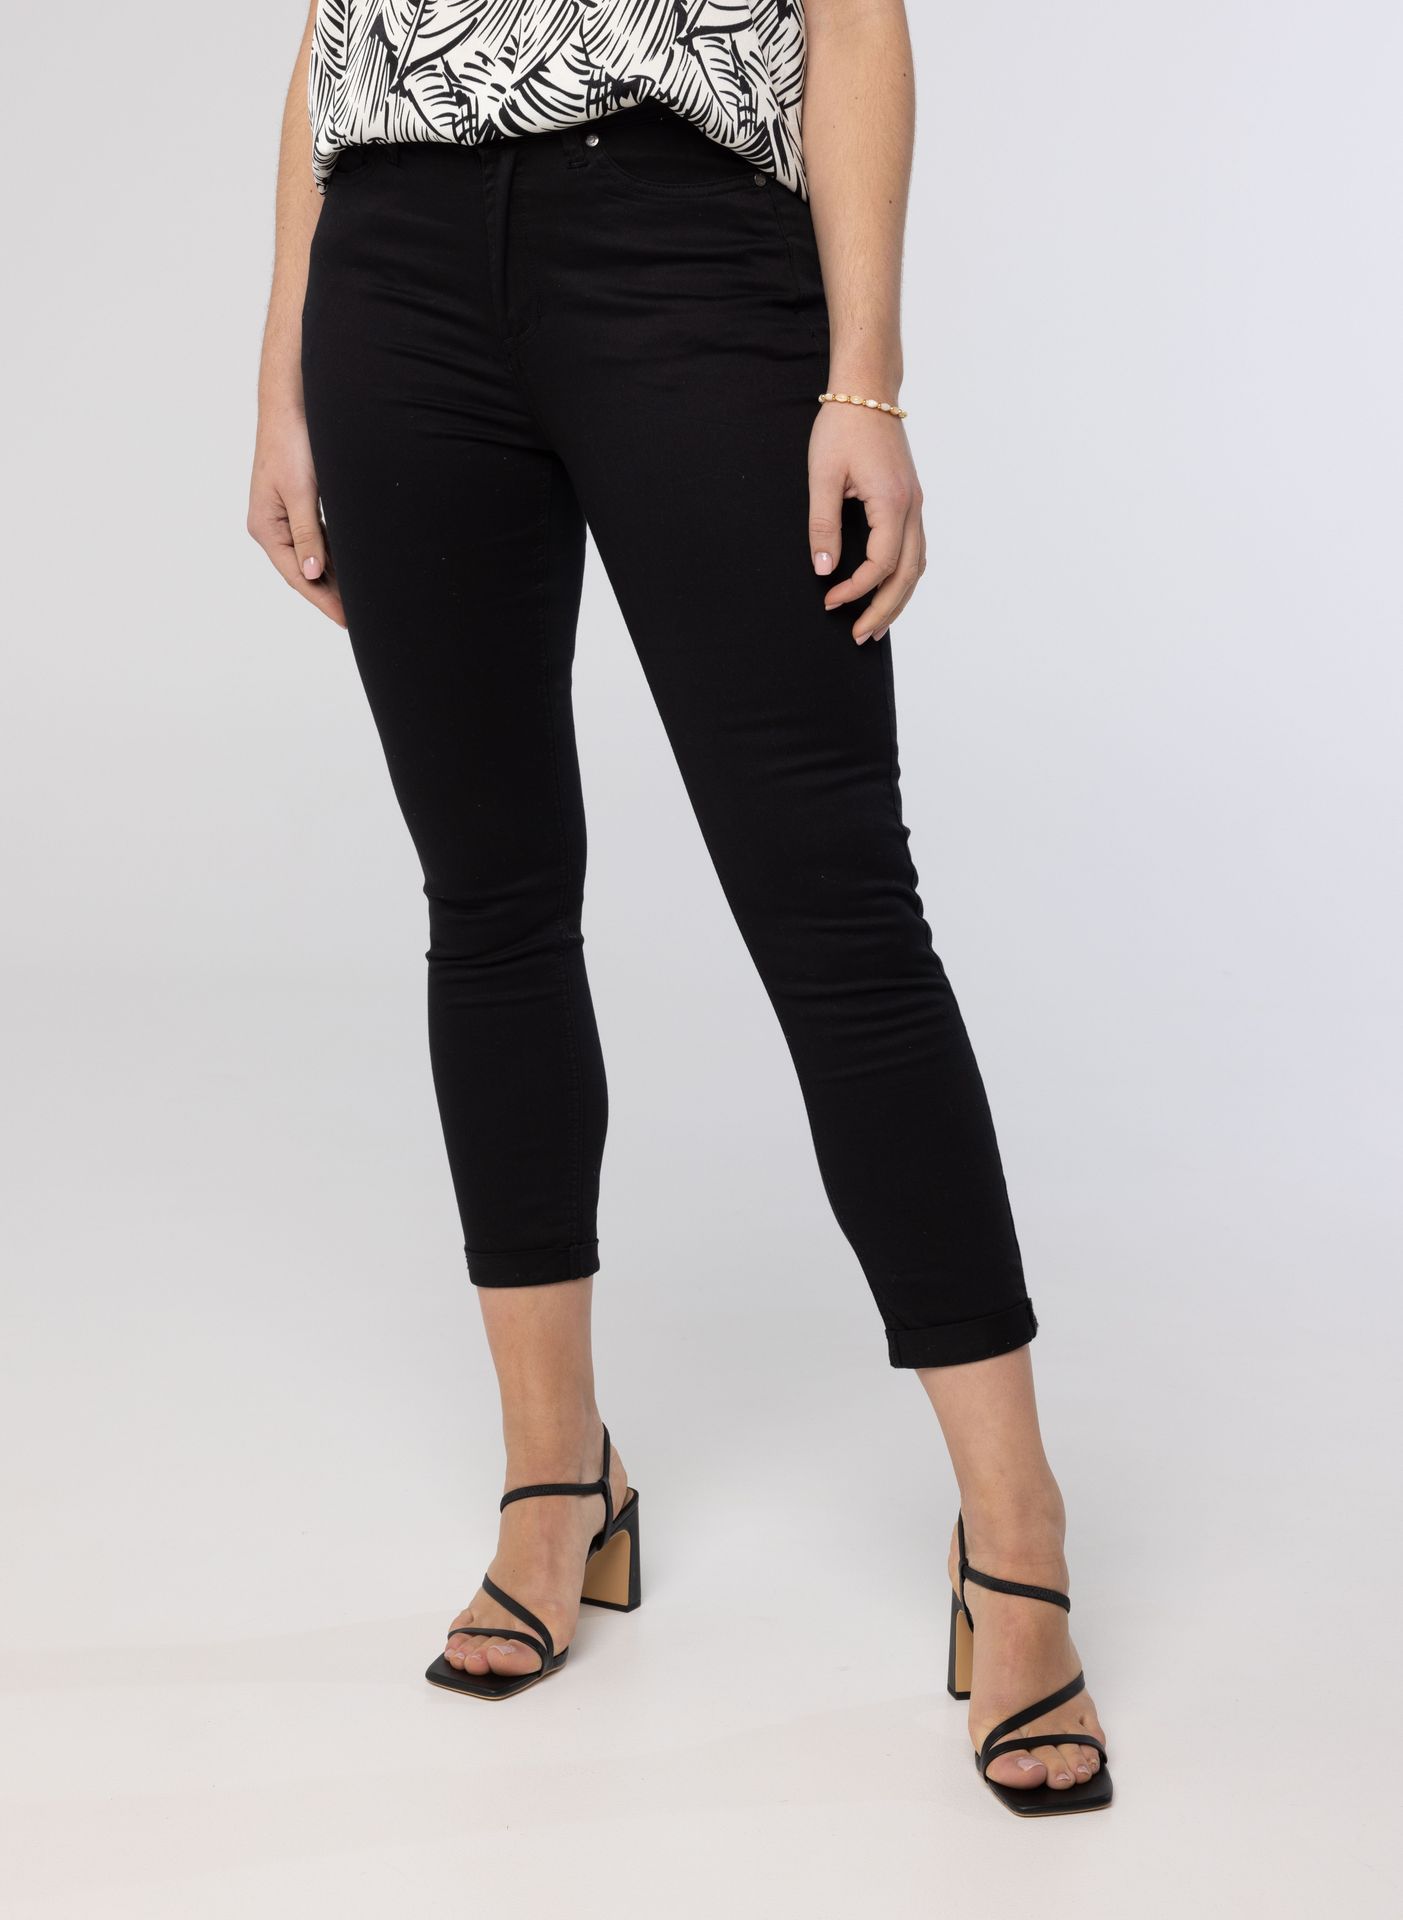 Norah Zwarte jeans black 211002-001